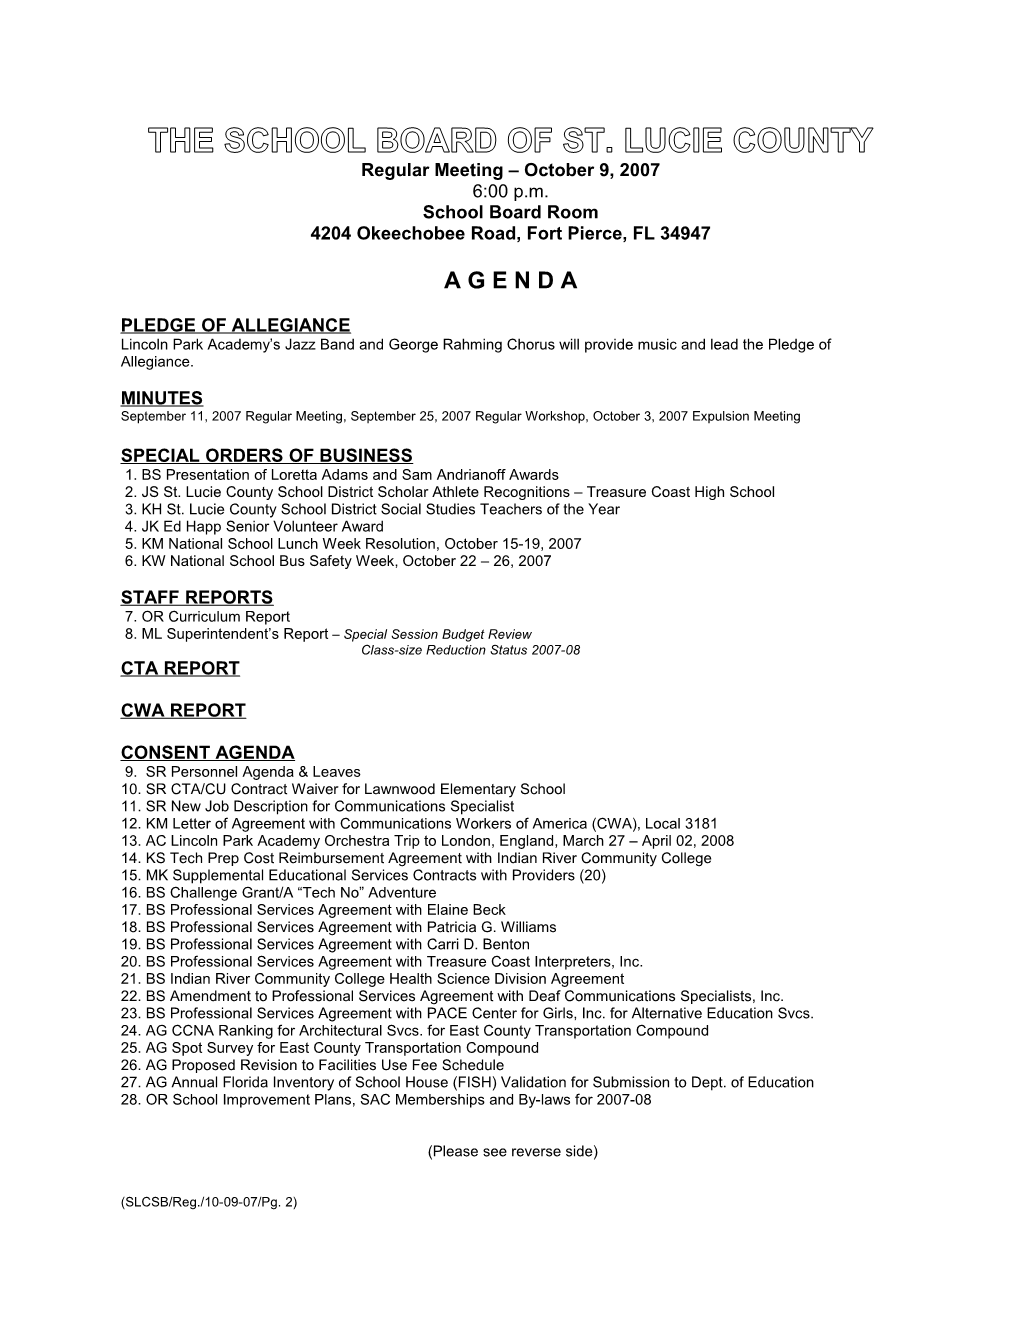 10-09-07 SLCSB Regular Meeting Agenda